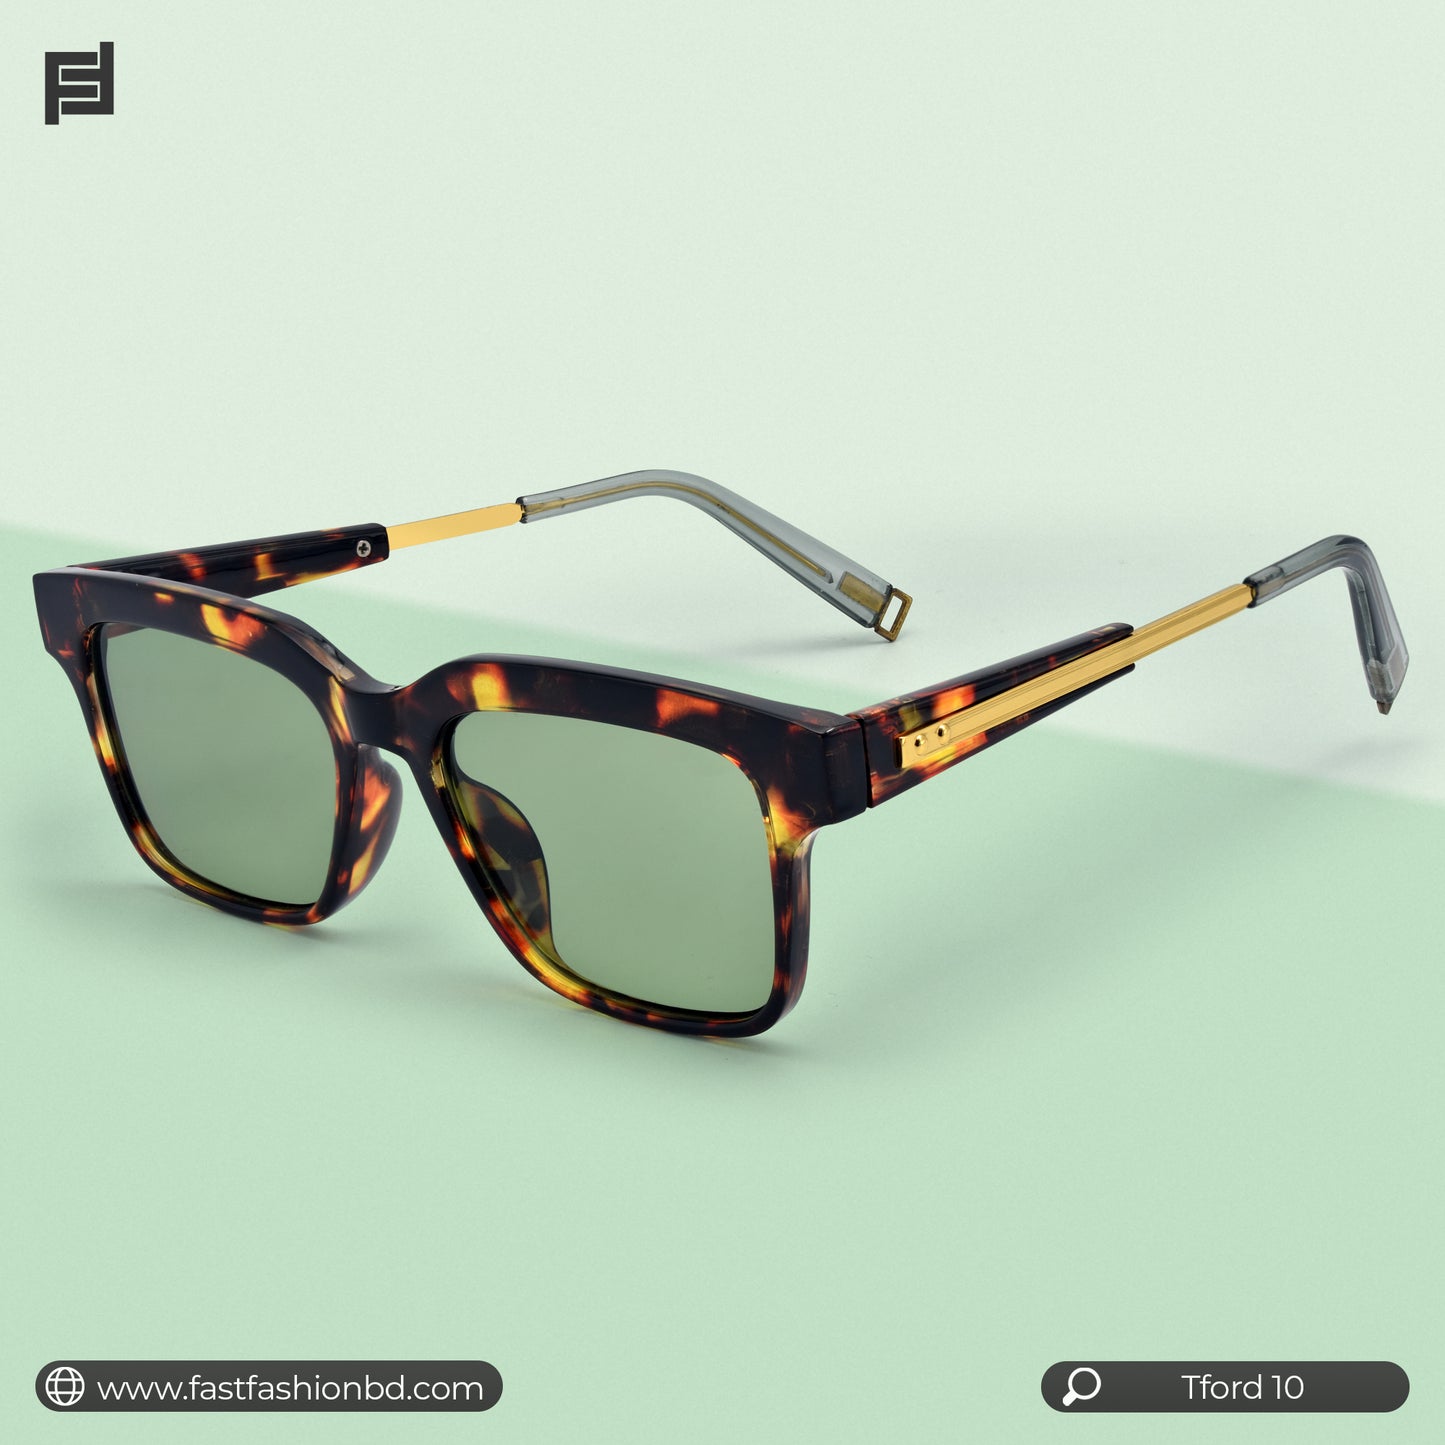 Premium Quality Stylish Wayfarer Shape Sunglass Exclusive | TFord 10